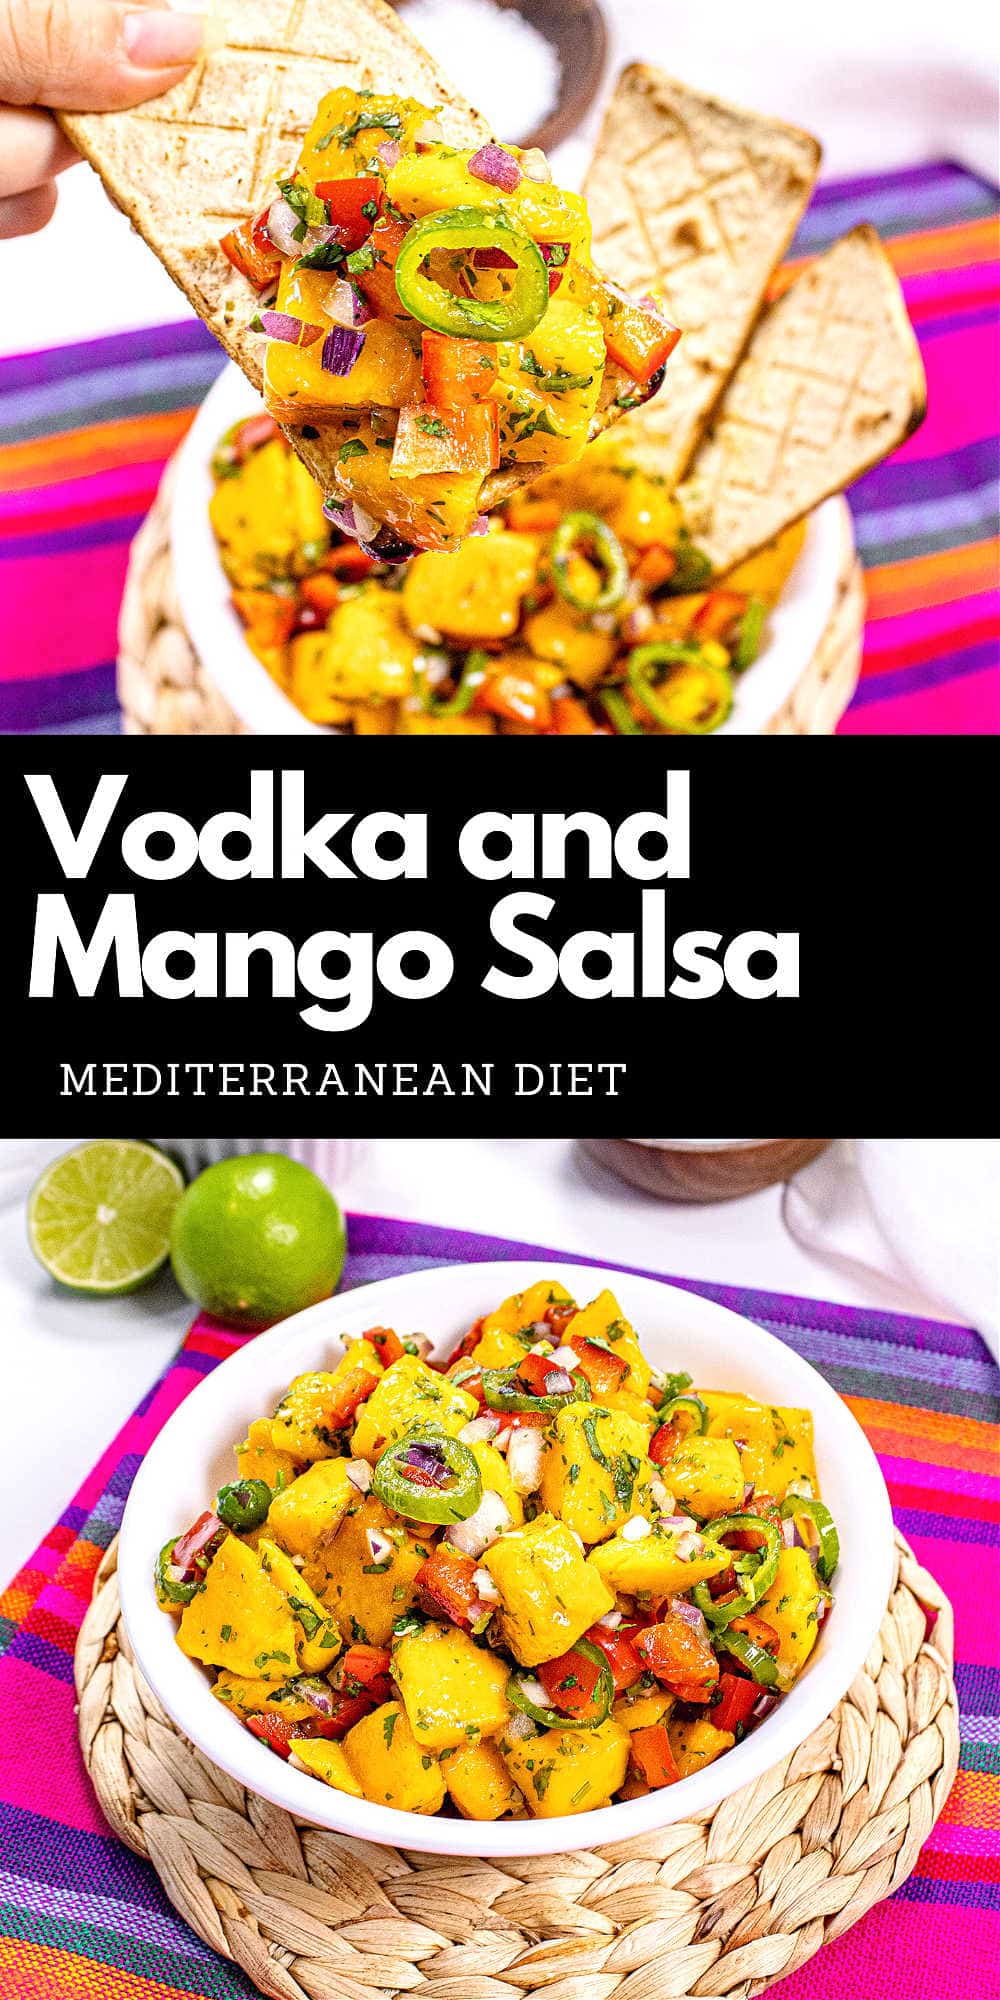 Vodka and Mango Salsa